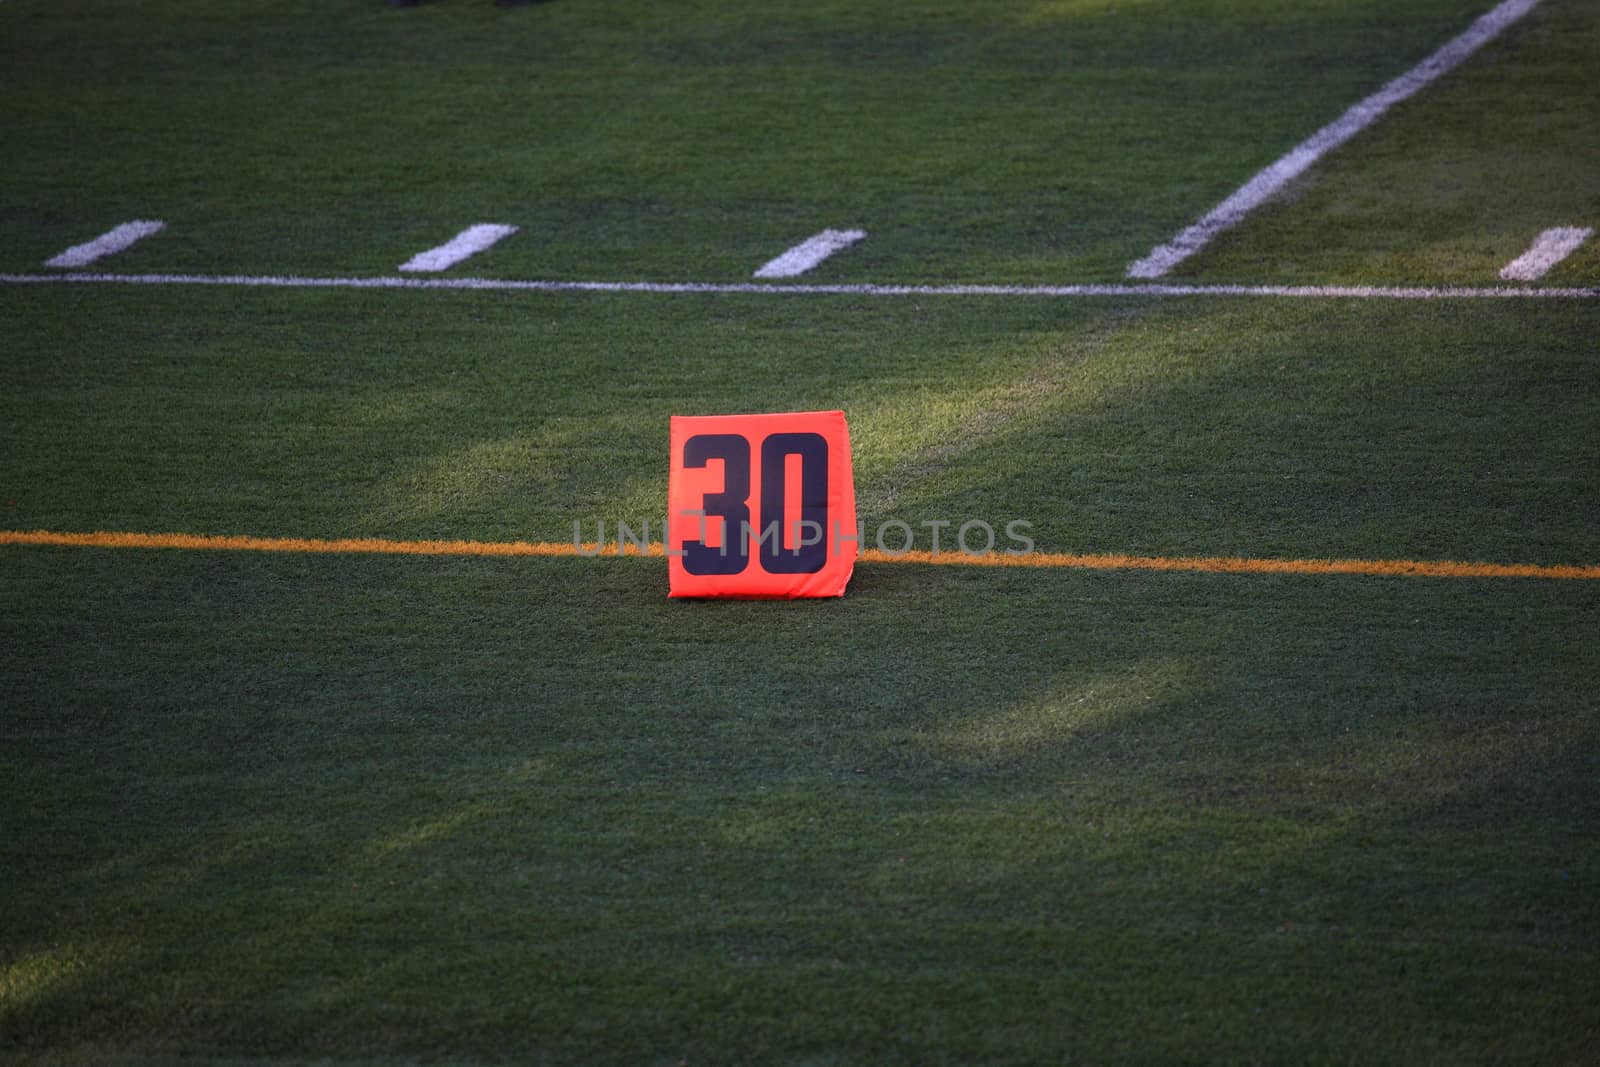 Football game 30 Yard Marker on a green turf field.